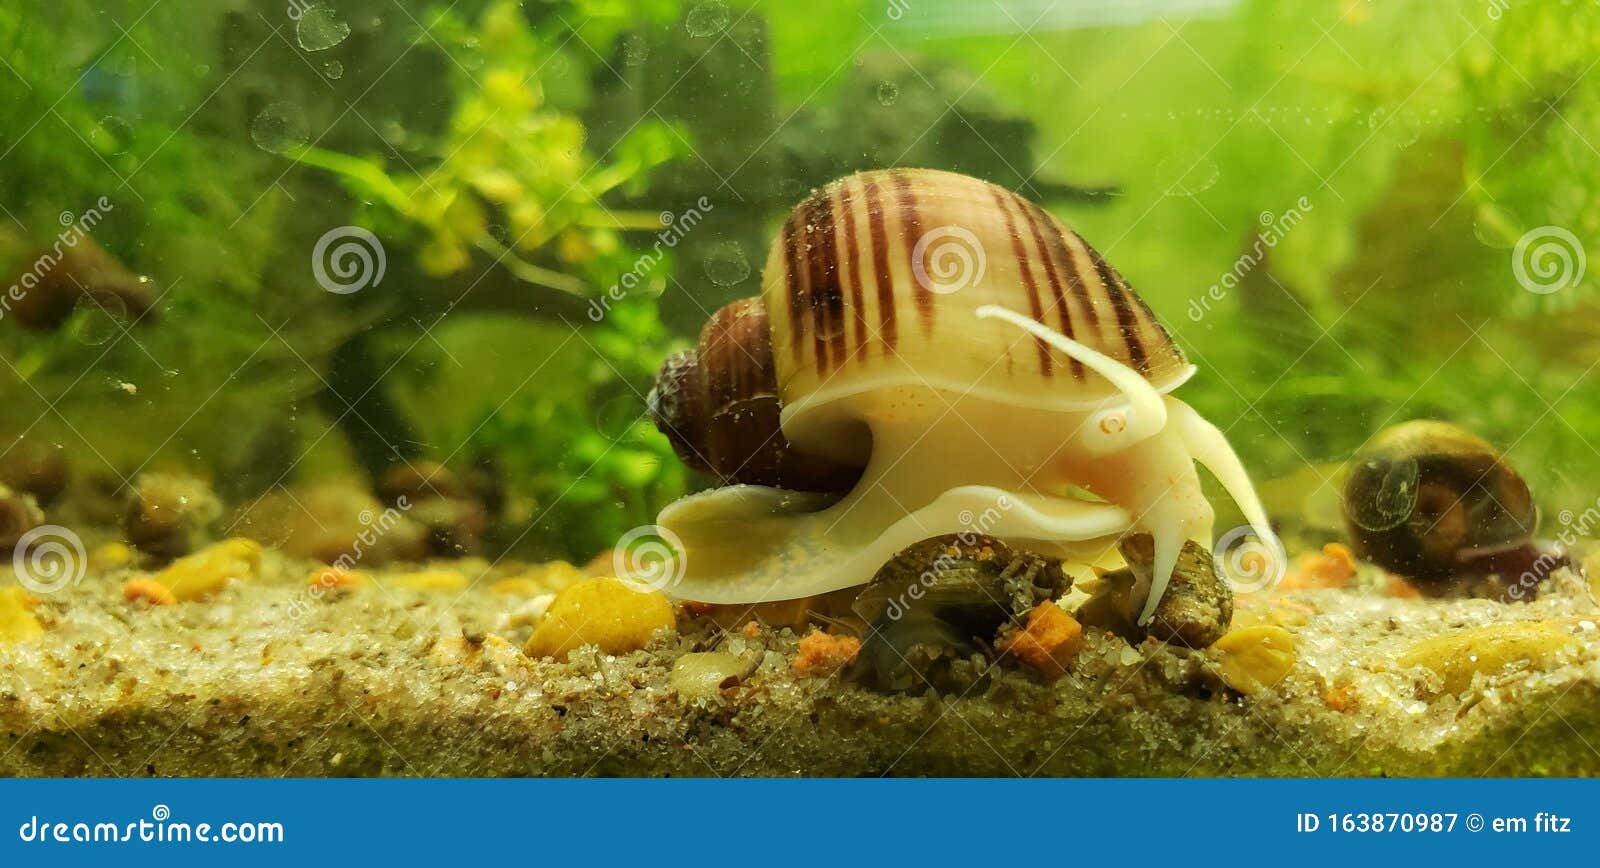 mystery snail appreciation